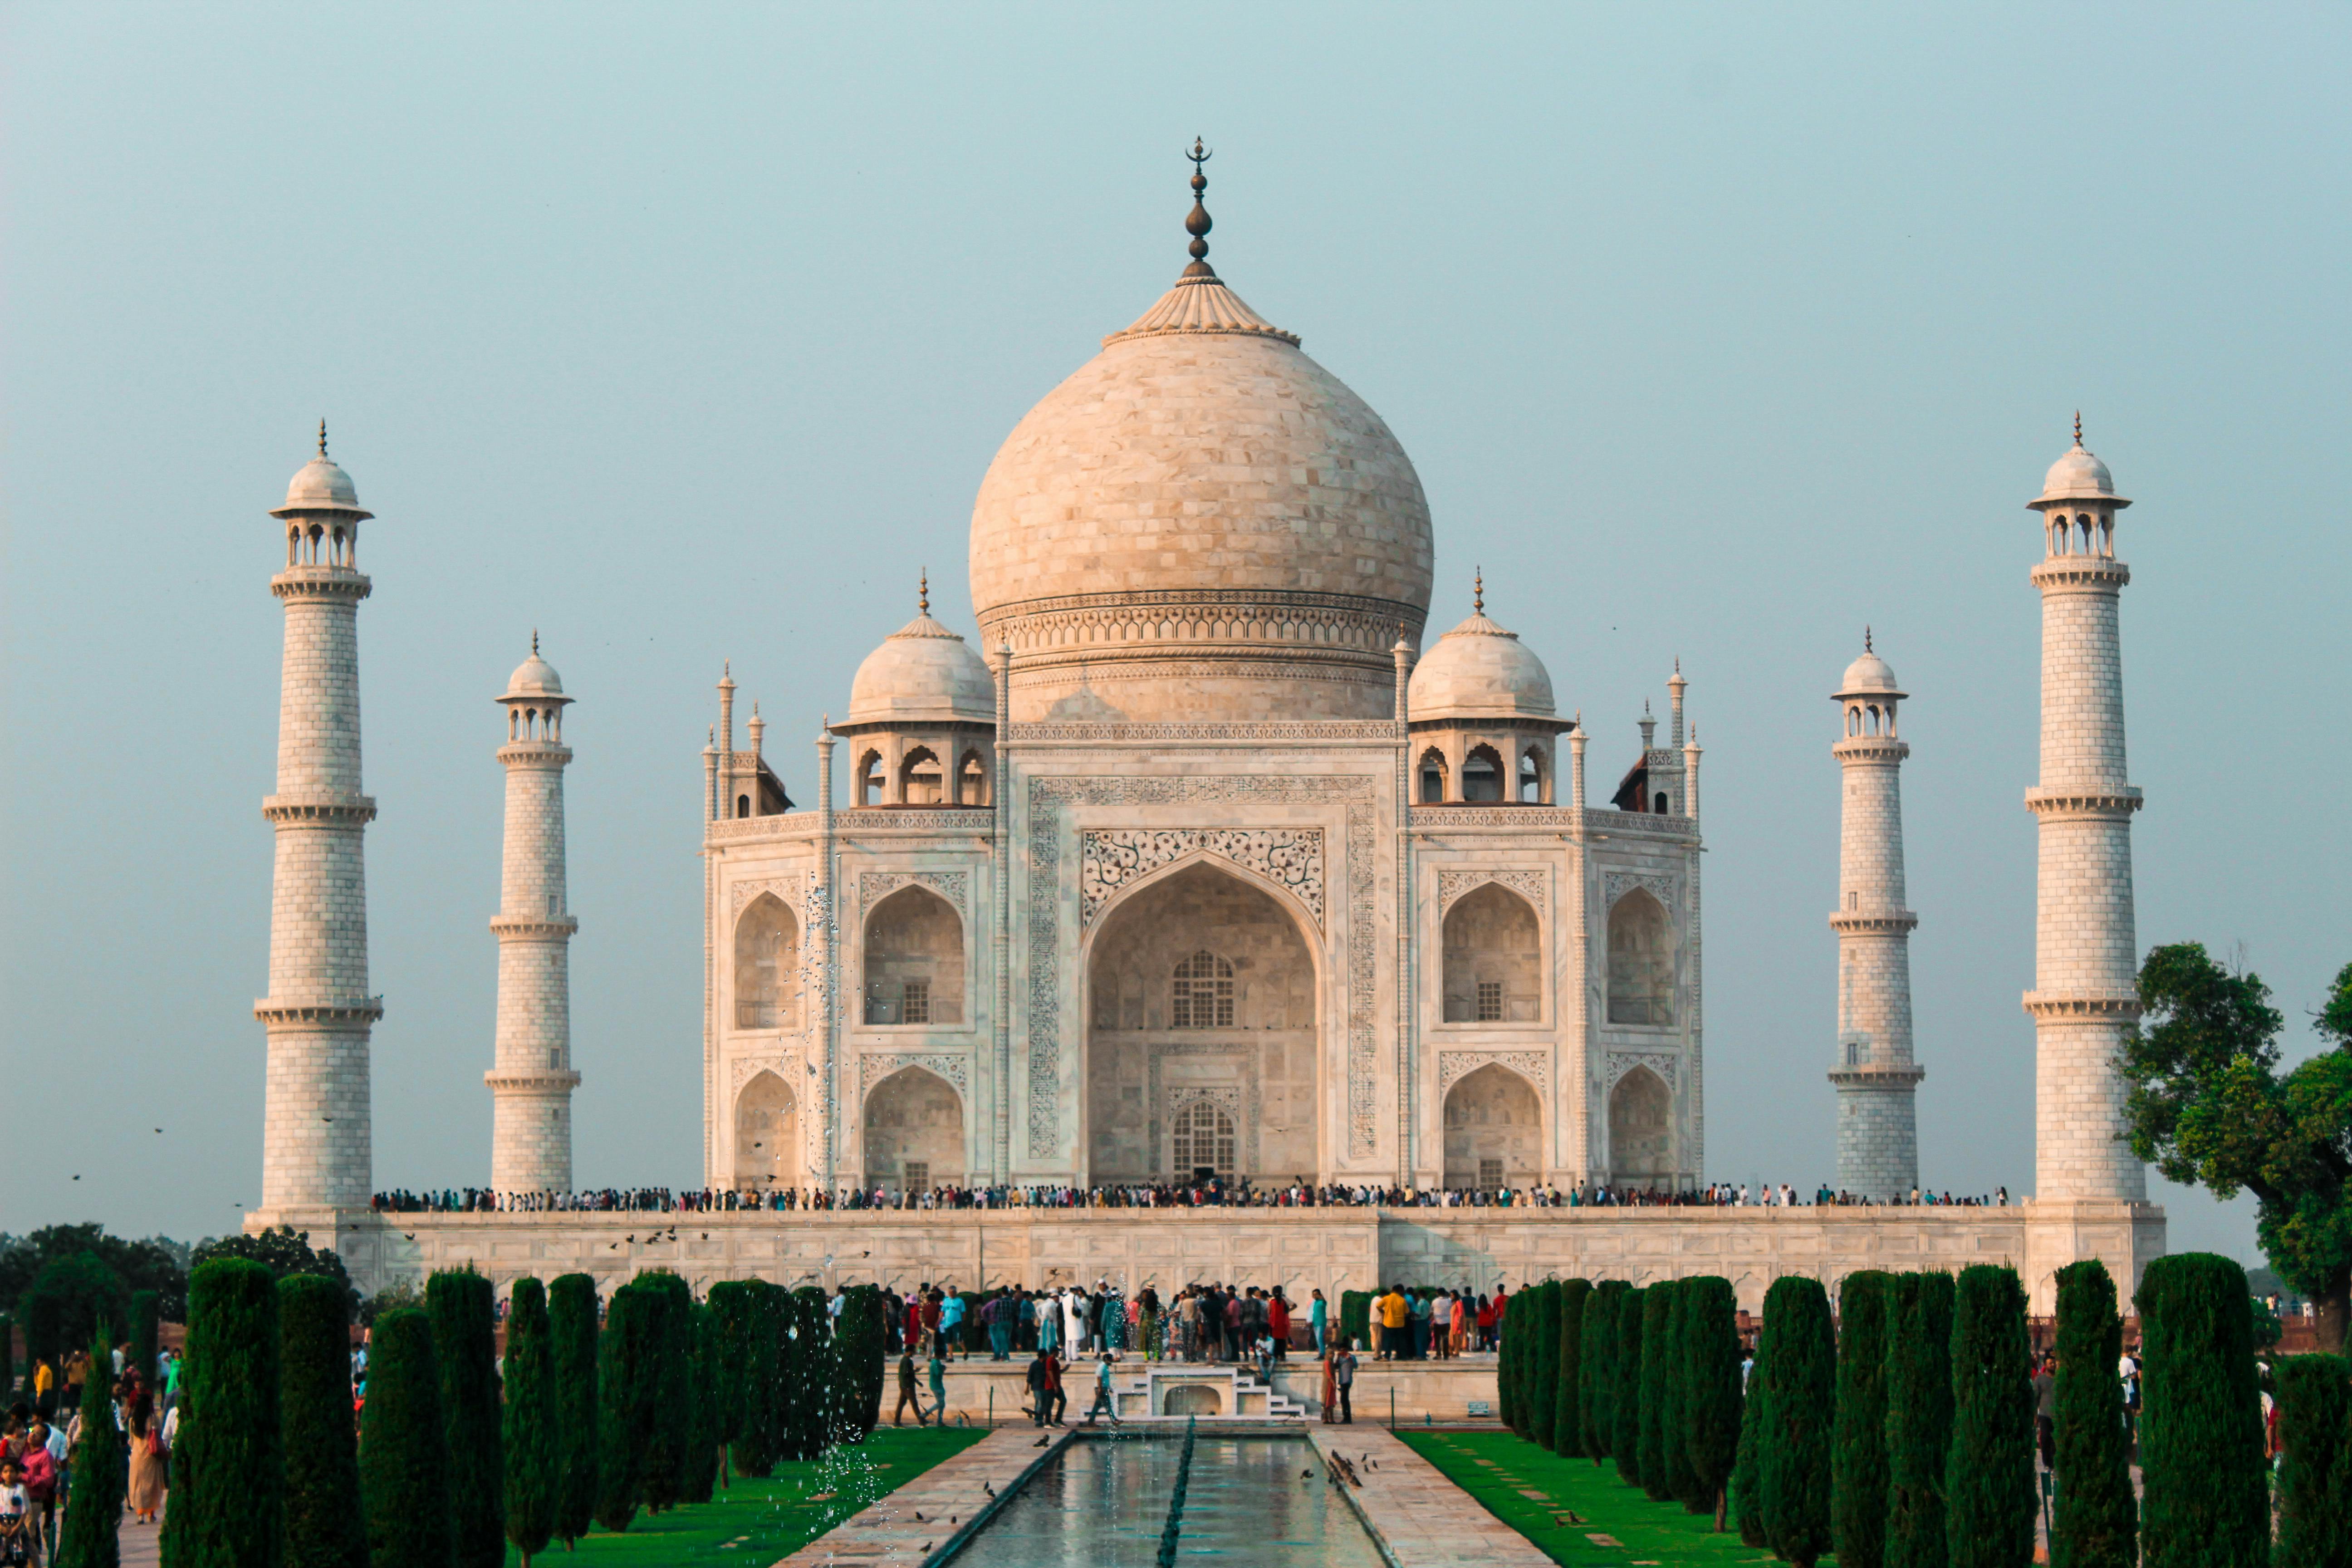 Taj Mahal Photos, Download The BEST Free Taj Mahal Stock Photos & HD Images